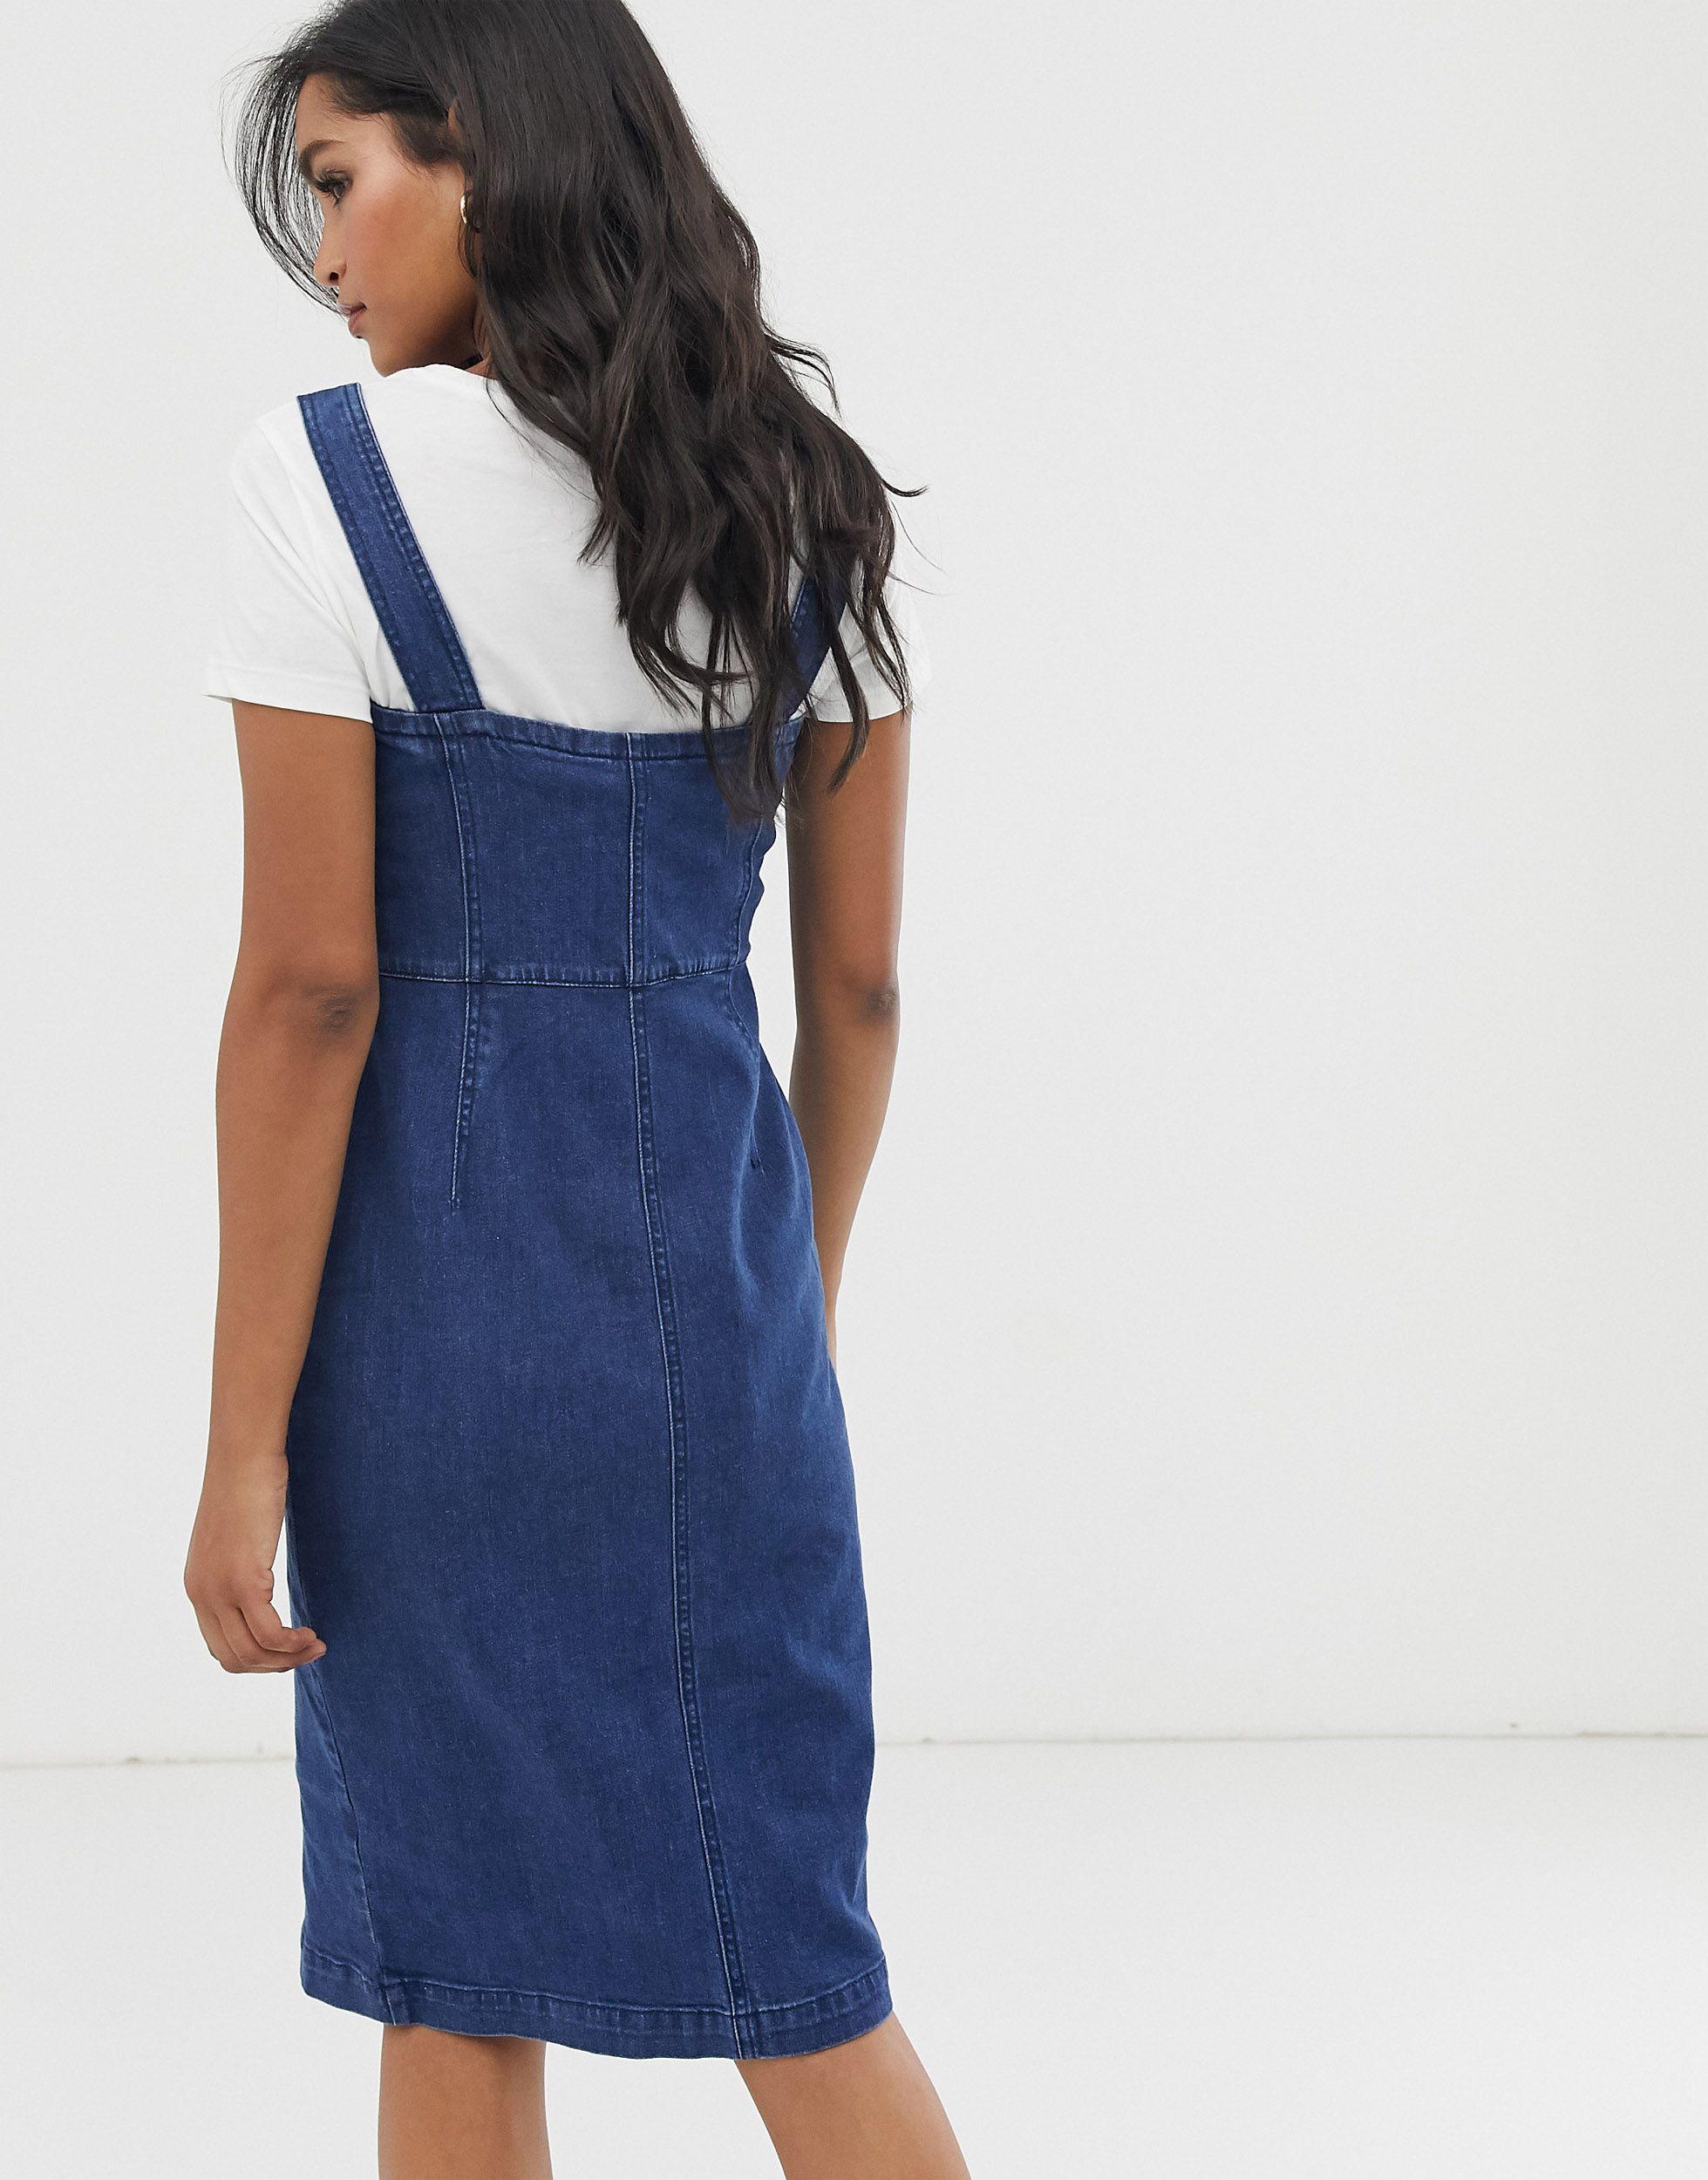 Promoten Oeps draad Vero Moda Button Through Denim Dress in Blue - Lyst